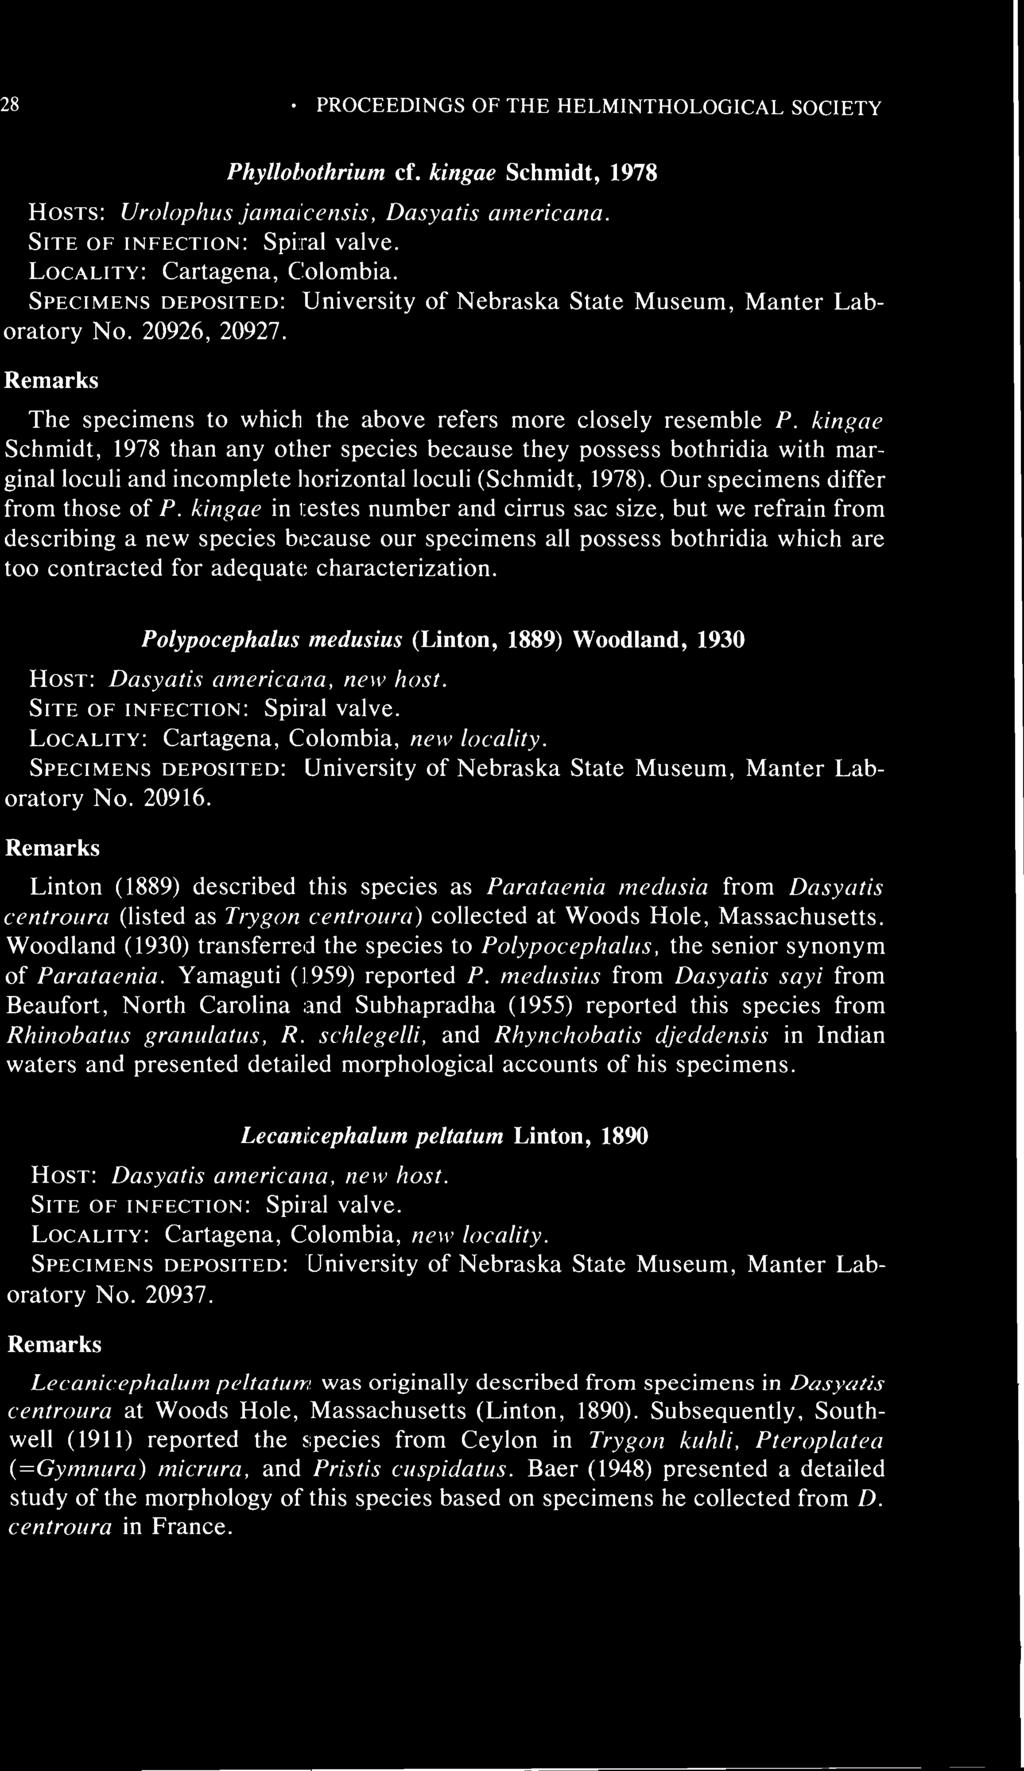 28 PROCEEDINGS OF THE HELMINTHOLOGICAL SOCIETY Phyllobothrium cf. kingae Schmidt, 1978 HOSTS: Urolophus jamaicensis, Dasyatis americana. LOCALITY: Cartagena, Colombia.